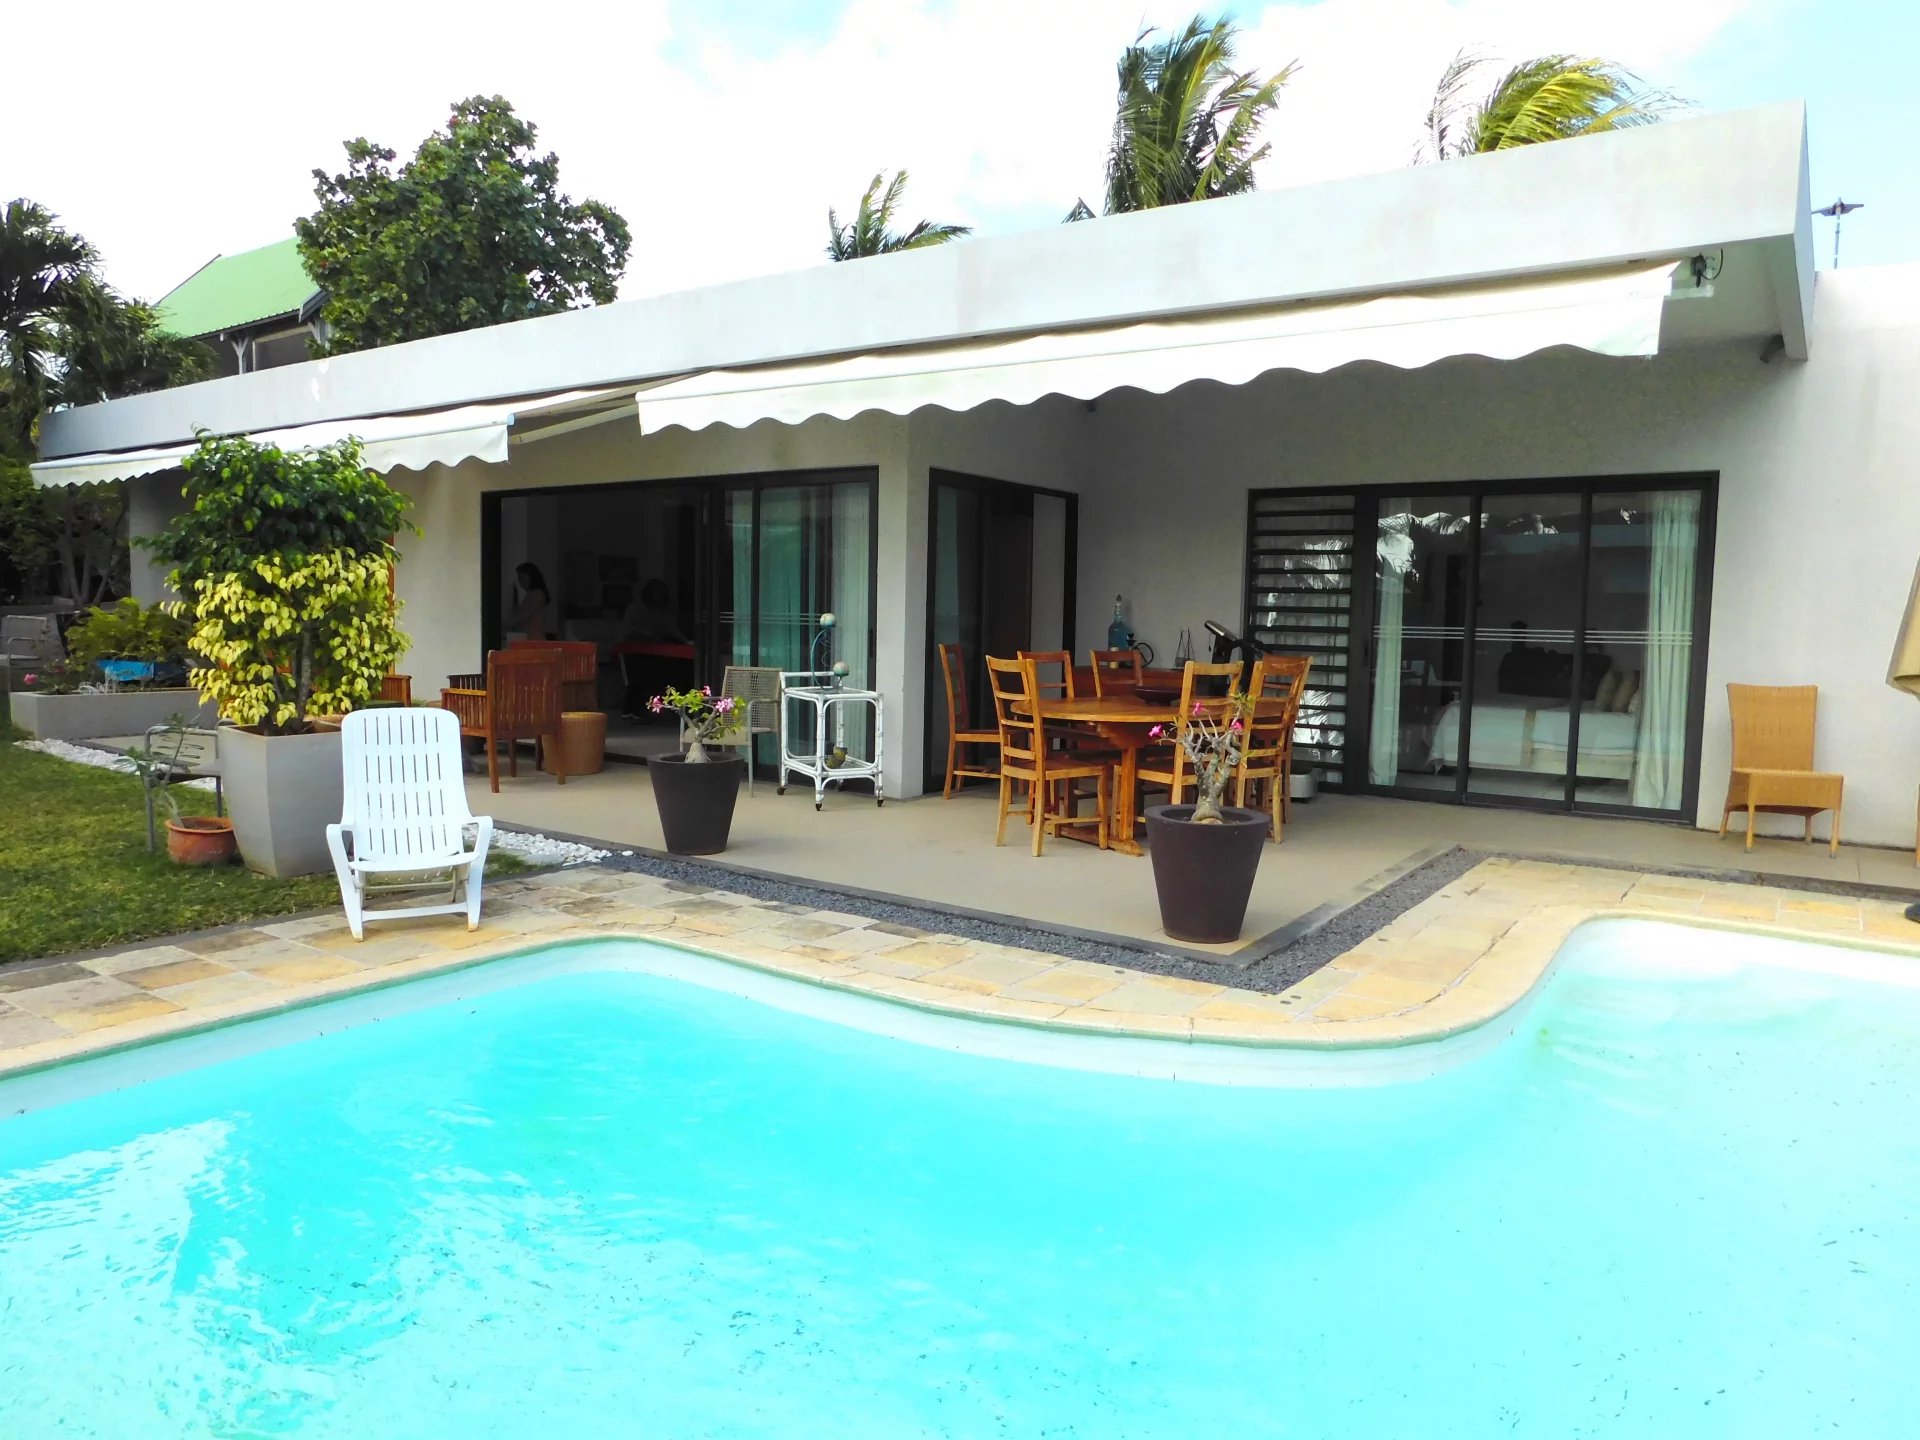 Rental House - Cap Malheureux - Mauritius